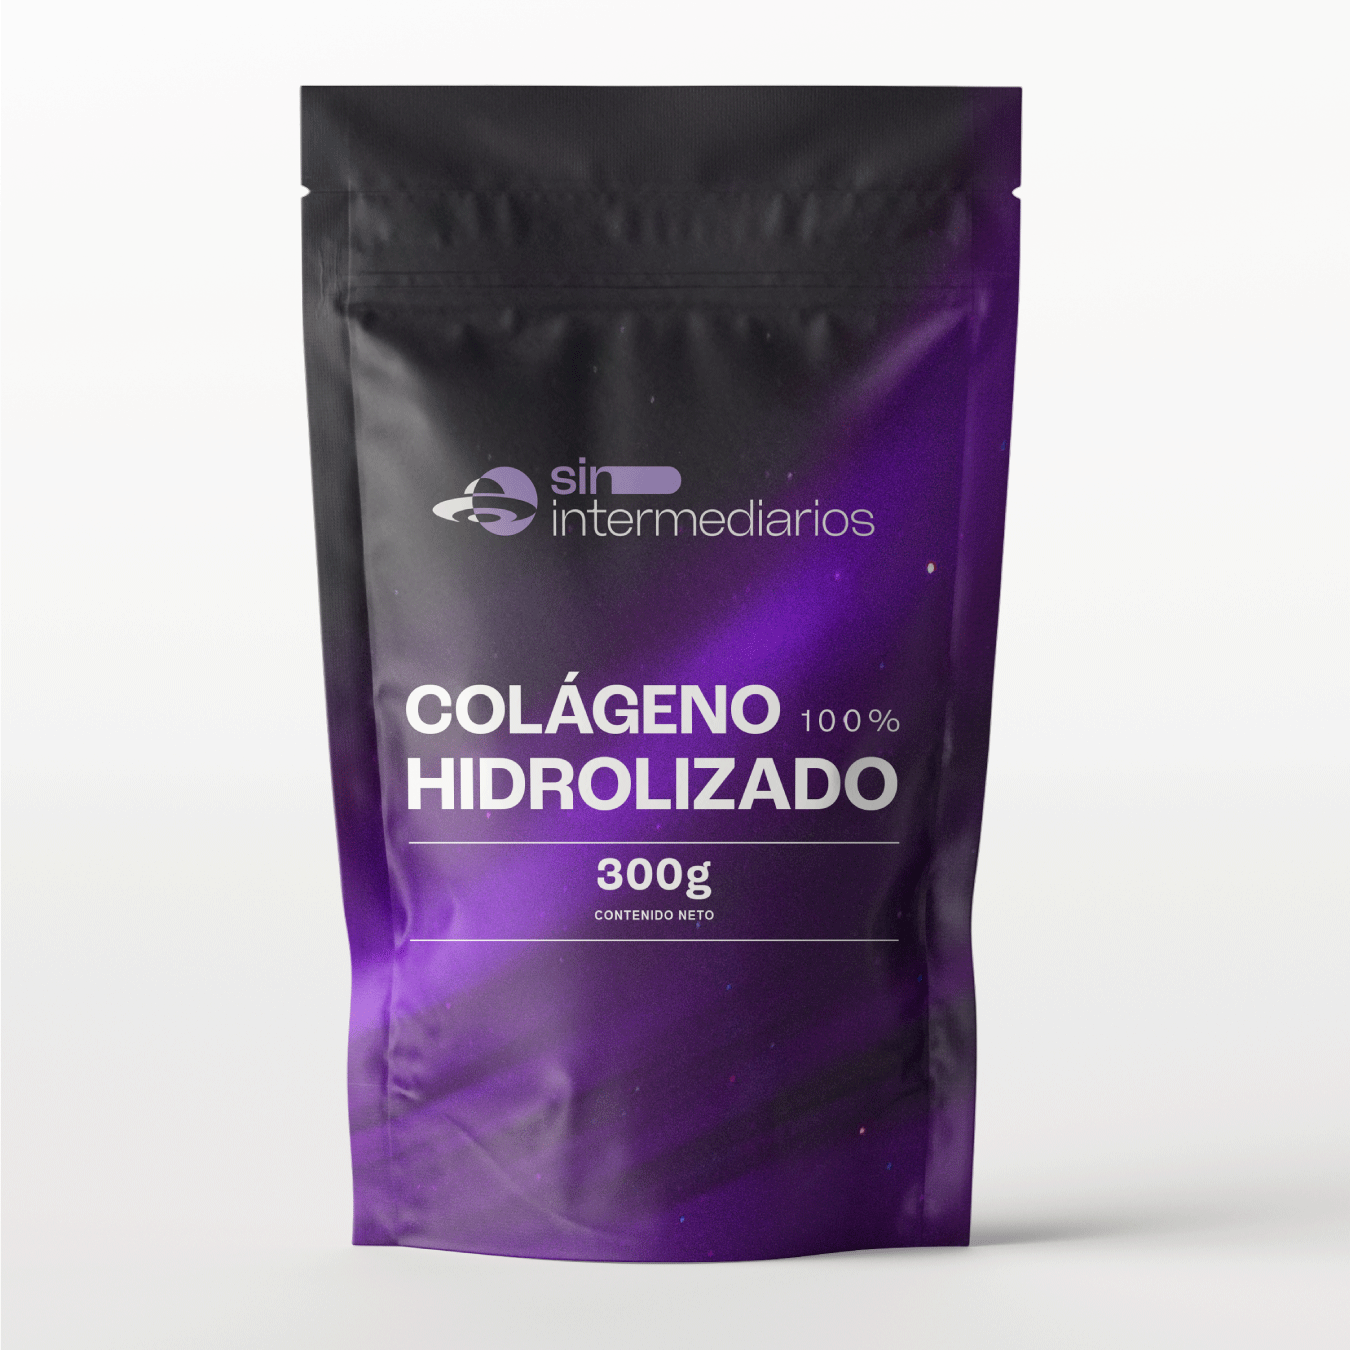 Colágeno Hidrolizado - 300g